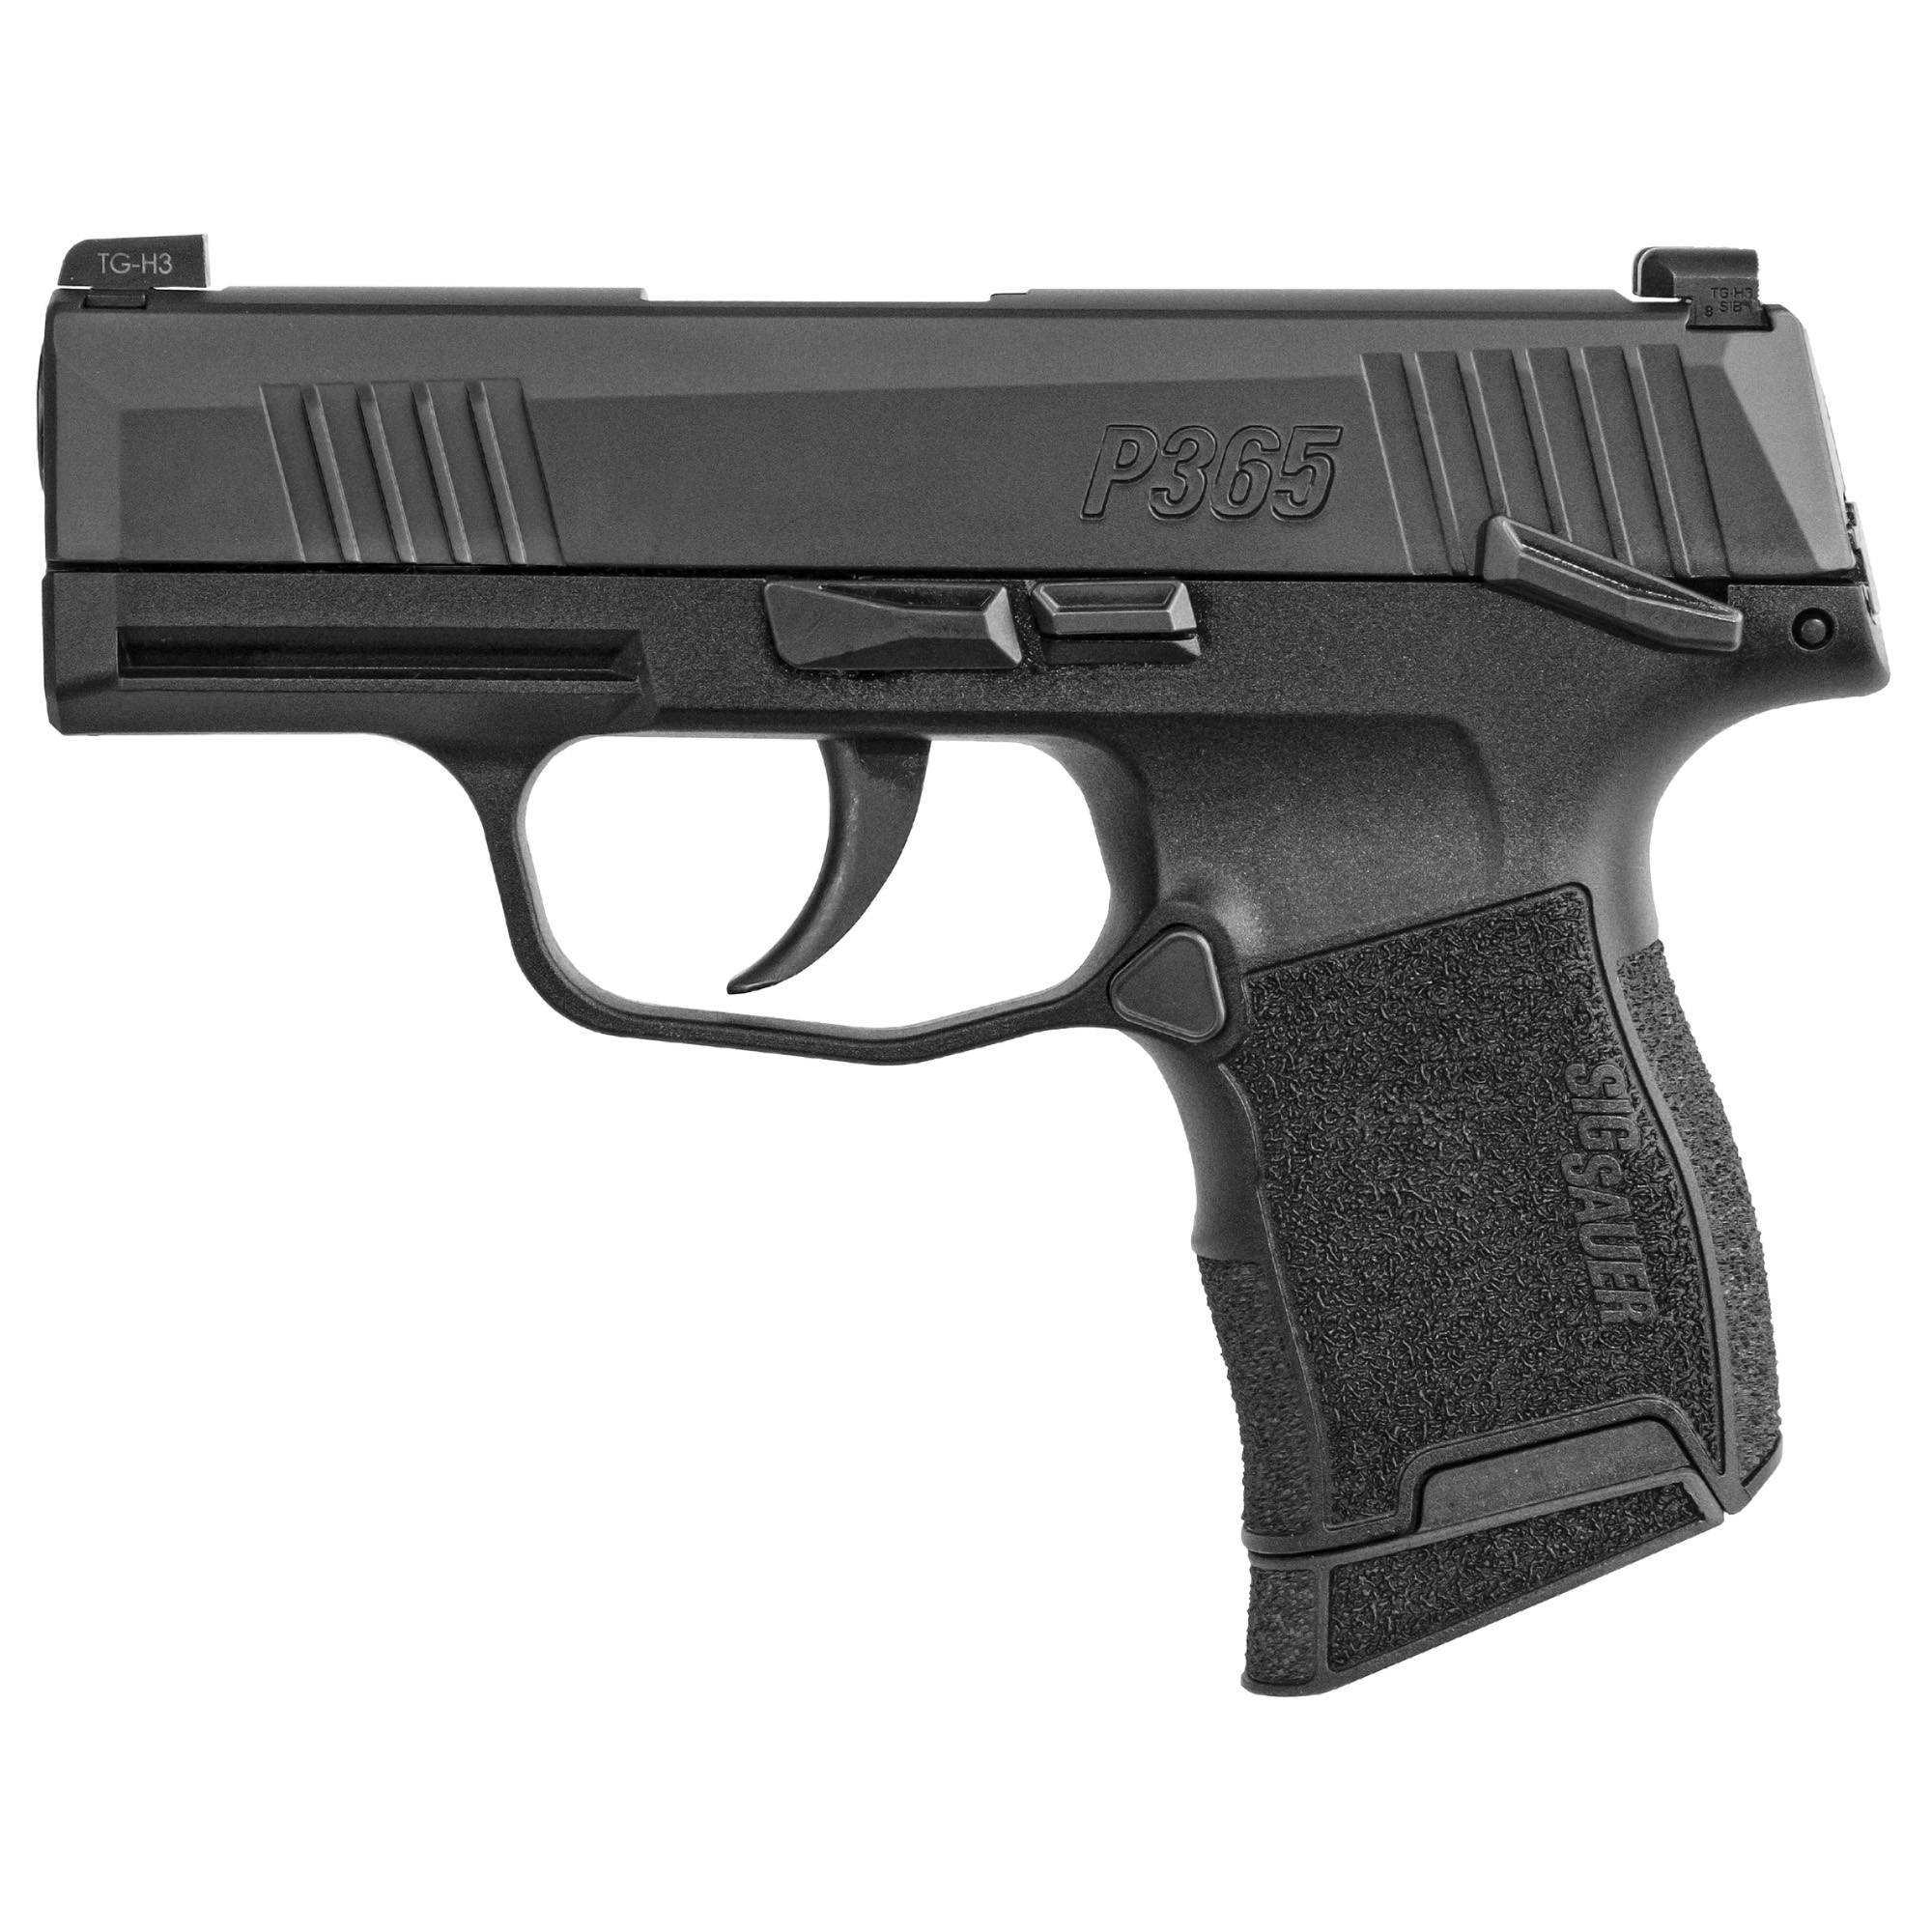 Sig Sauer P365 380ACP Pistol, Optic Ready, Manual Safety, Black (365-380-BSS-MS)